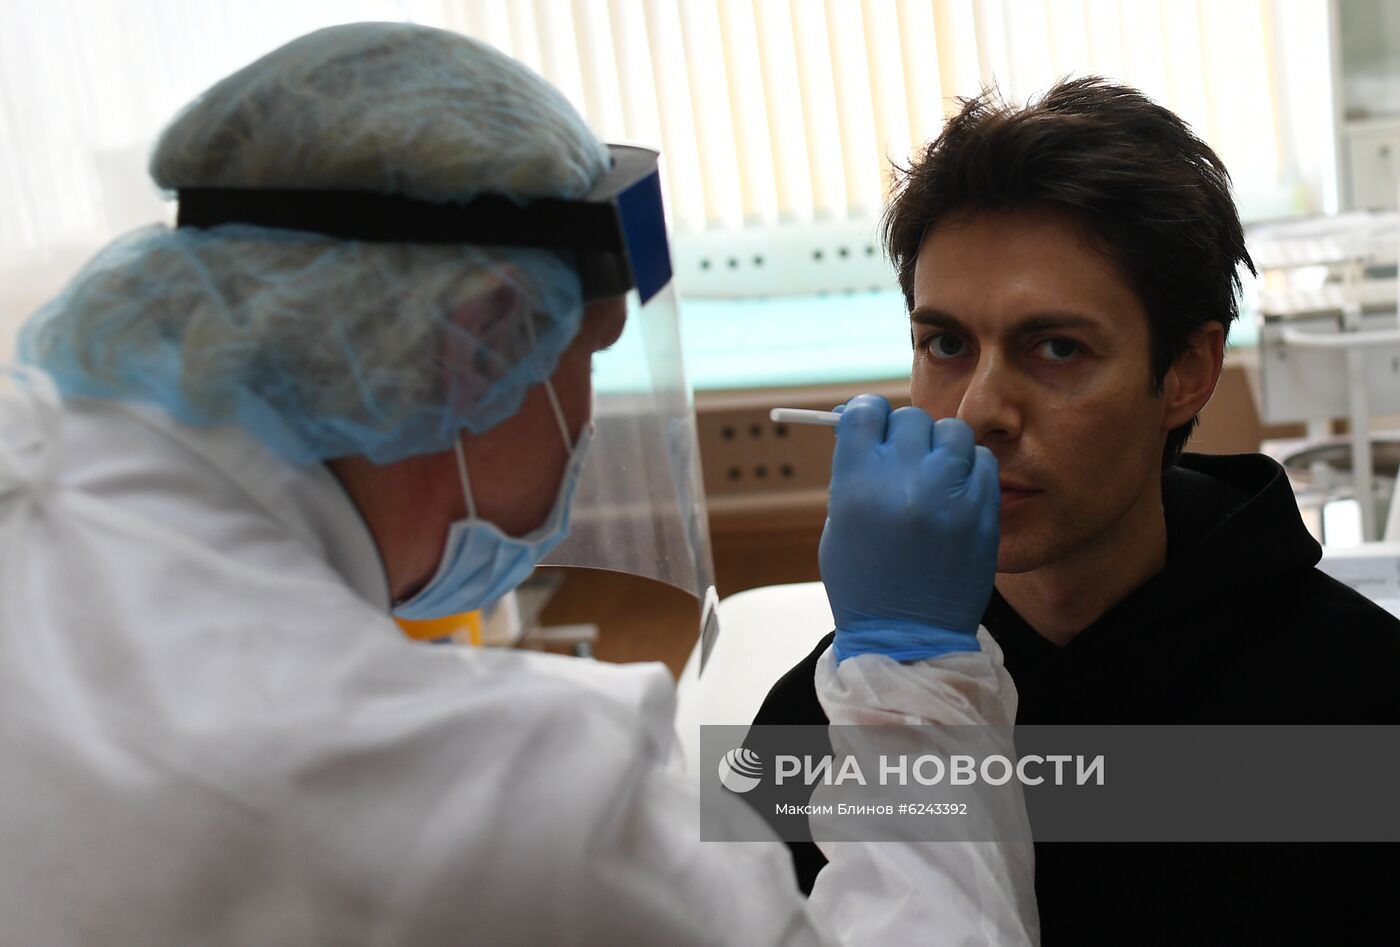 Тестирование россиян на наличие антител к COVID-19 в Москве